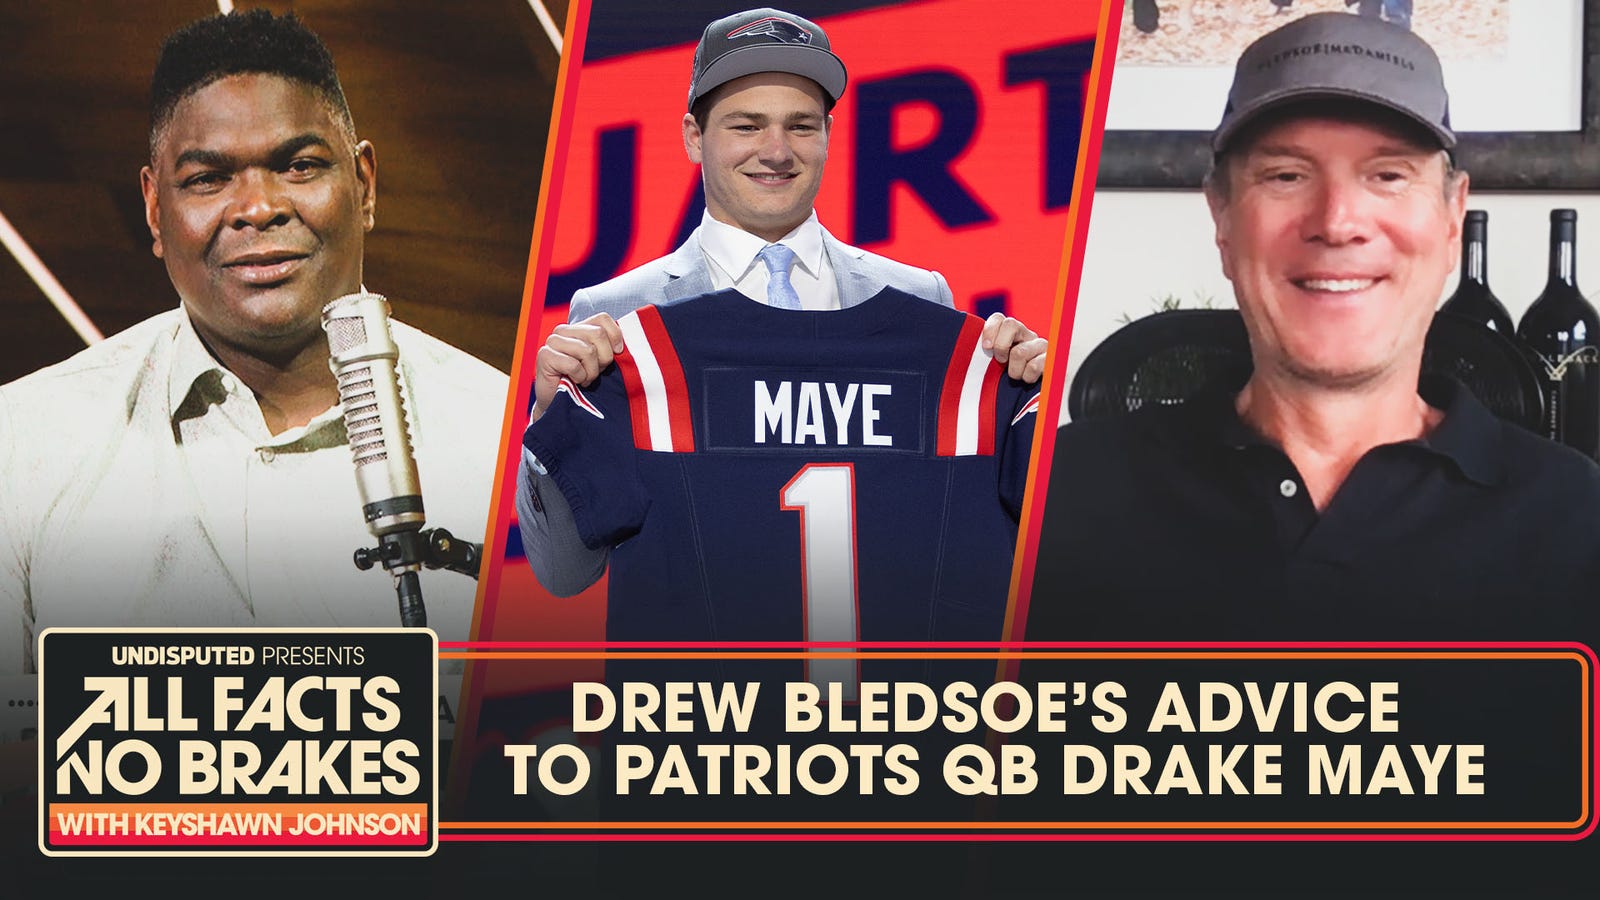 Drew Bledsoe's advice to Patriots rookie QB Drake Maye